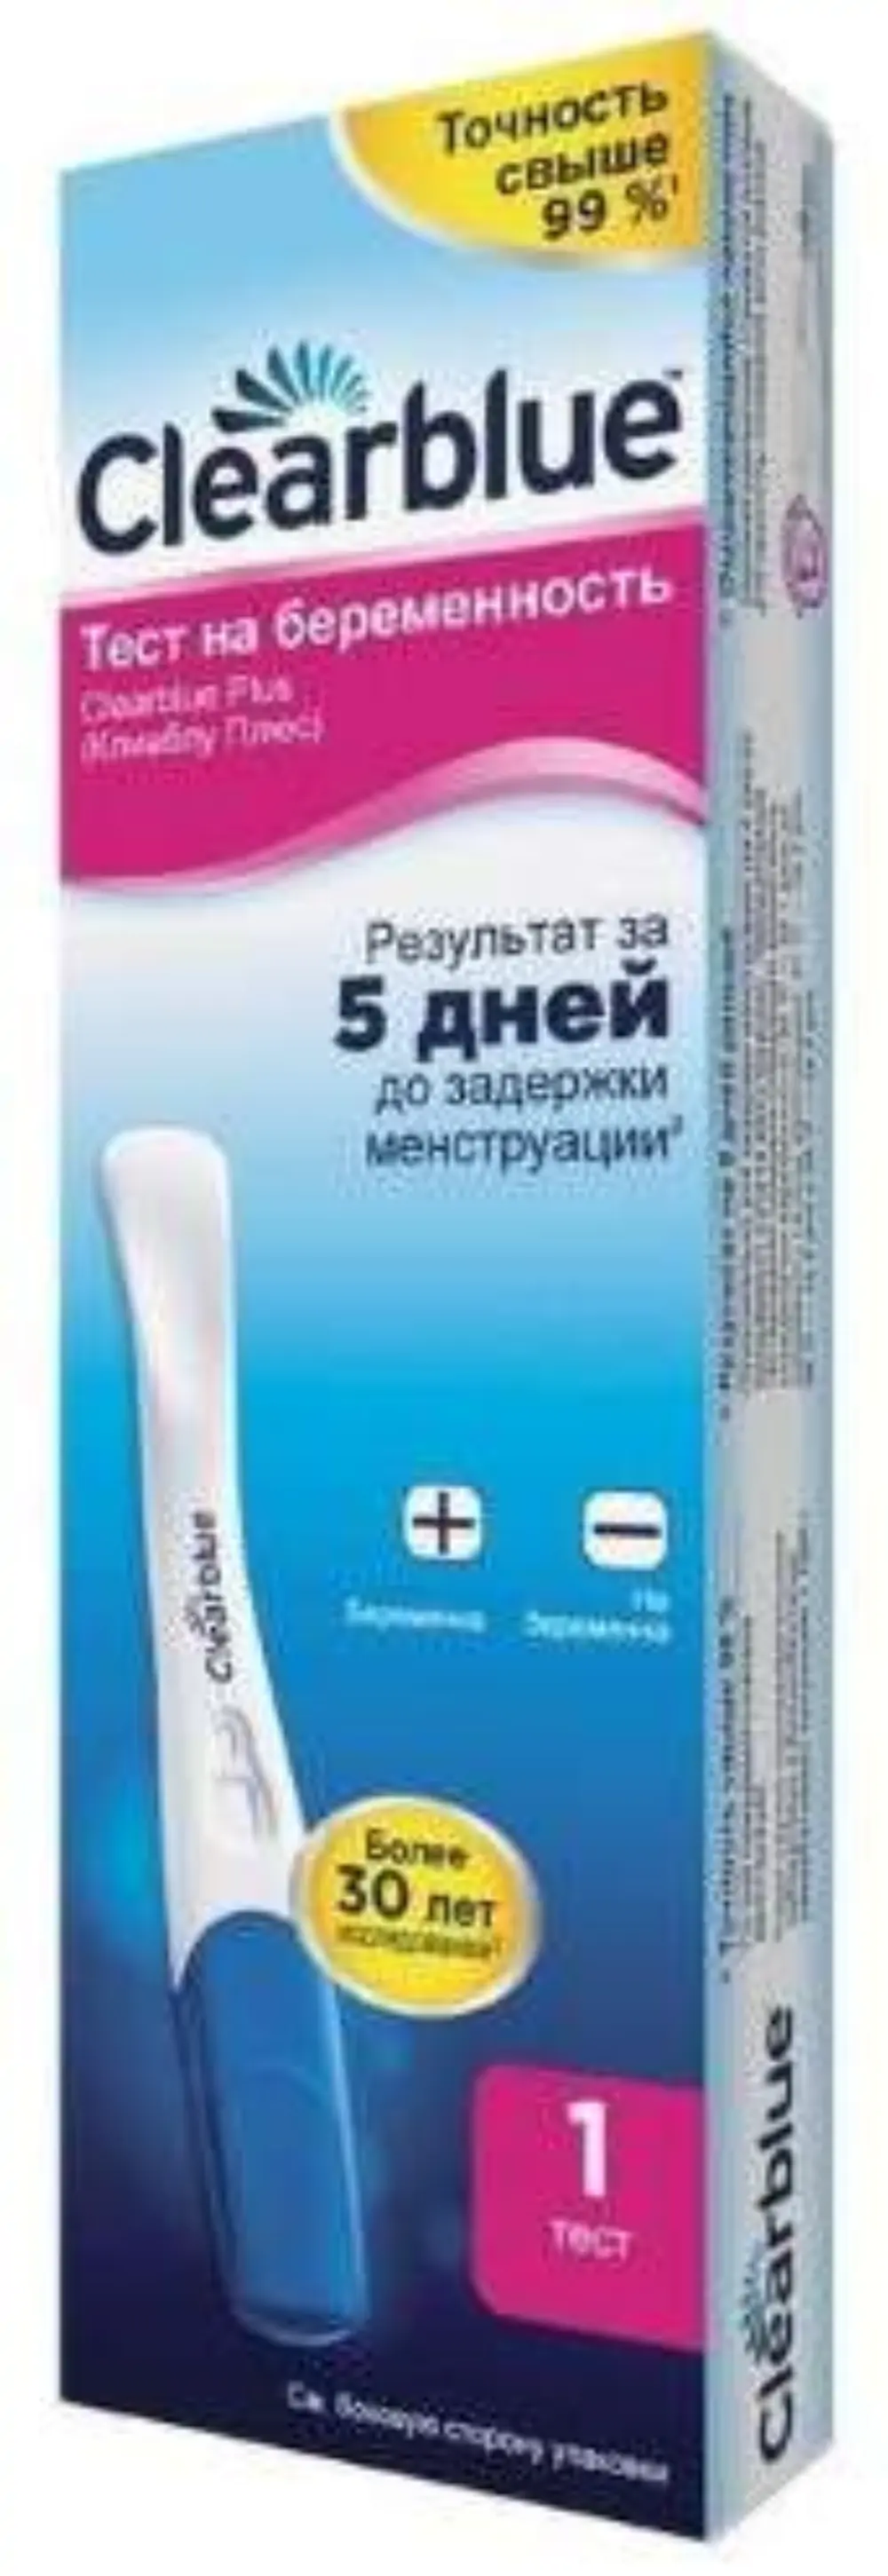 Тест клиаблу цифровой. Clearblue Plus 1 шт. Клиаблу тест на беременность. Тест на беременность купить. Тест на беременность Clearblue купить.